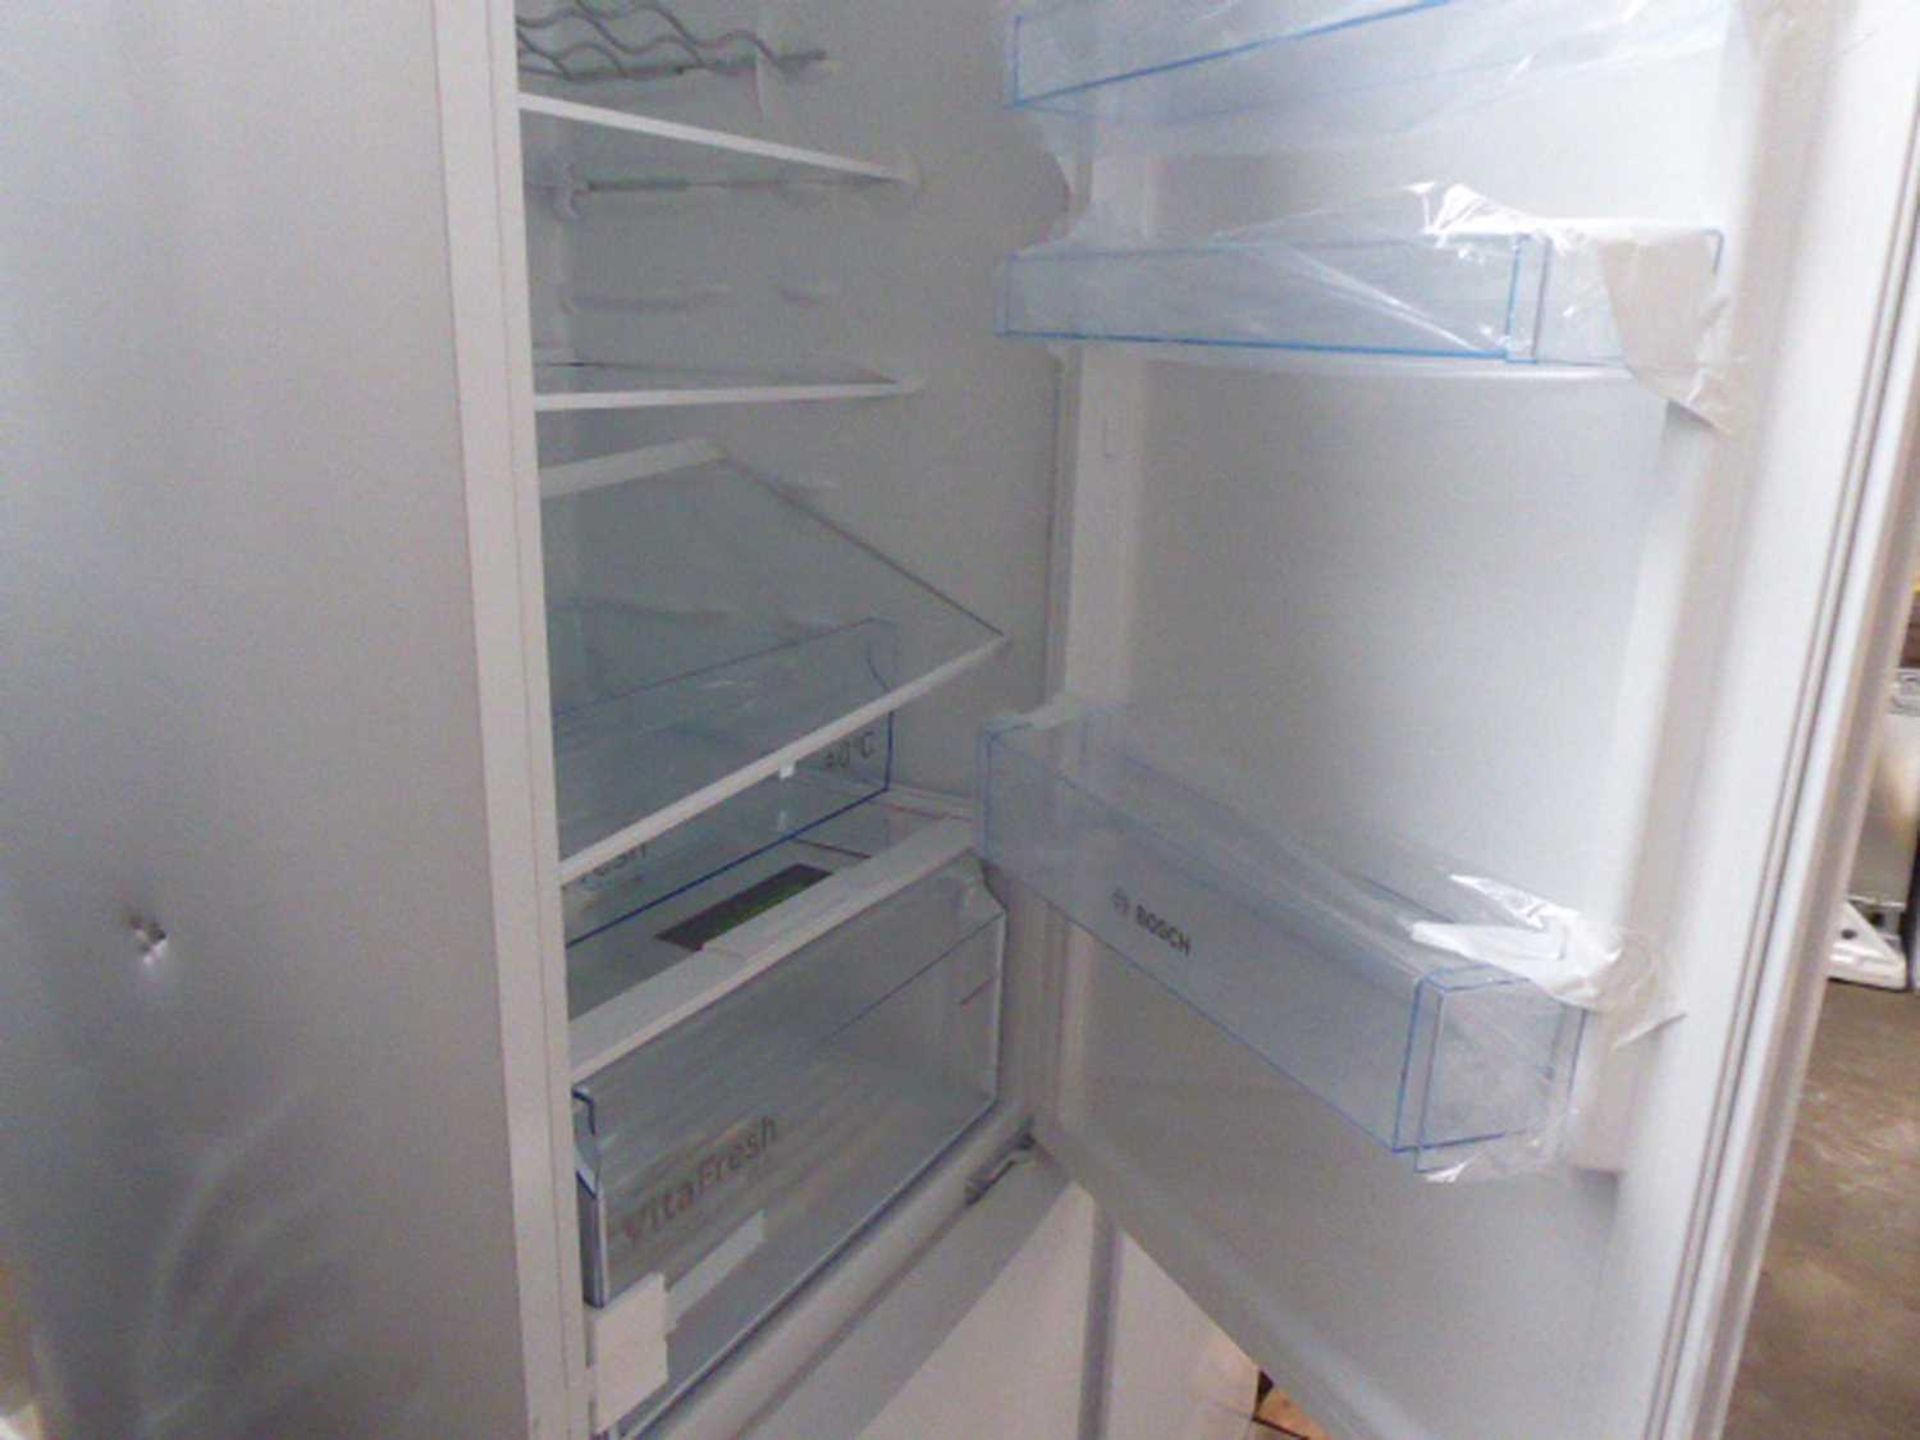 +VAT KGN39VWEAGB - Bosch - Free-standing fridge-freezer - Image 5 of 5